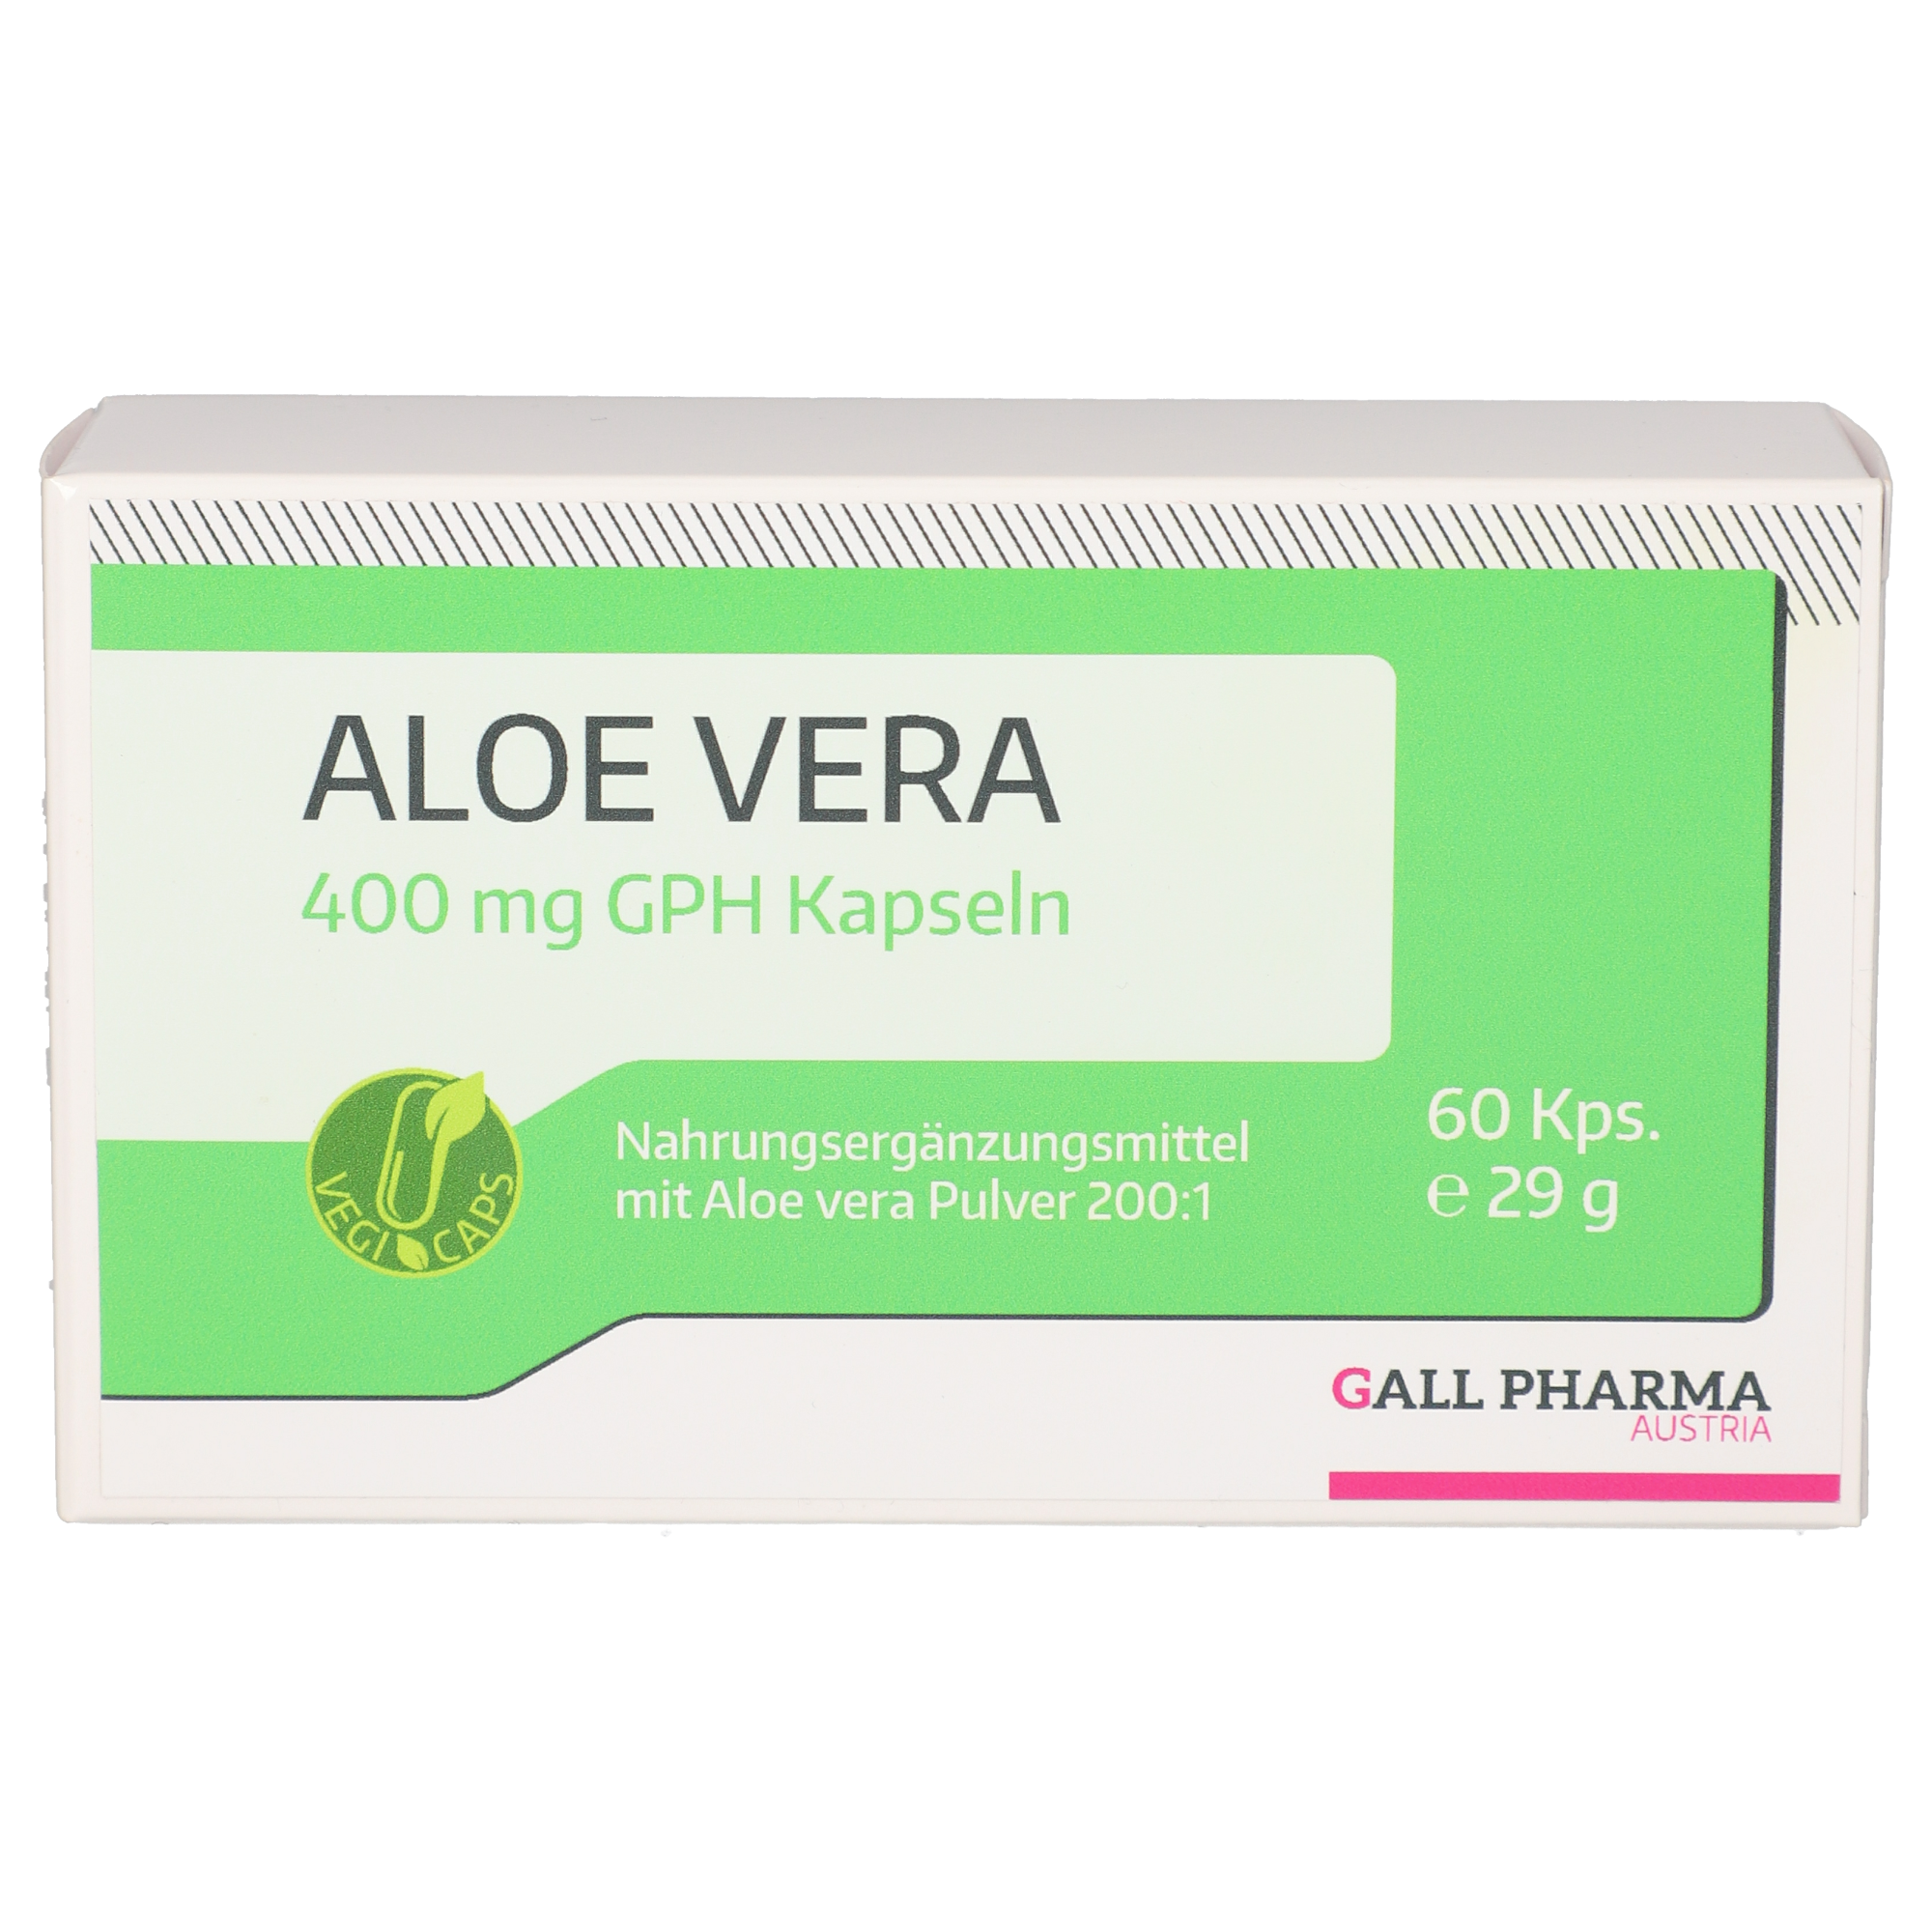 Aloe Vera 400 mg GPH Kapseln